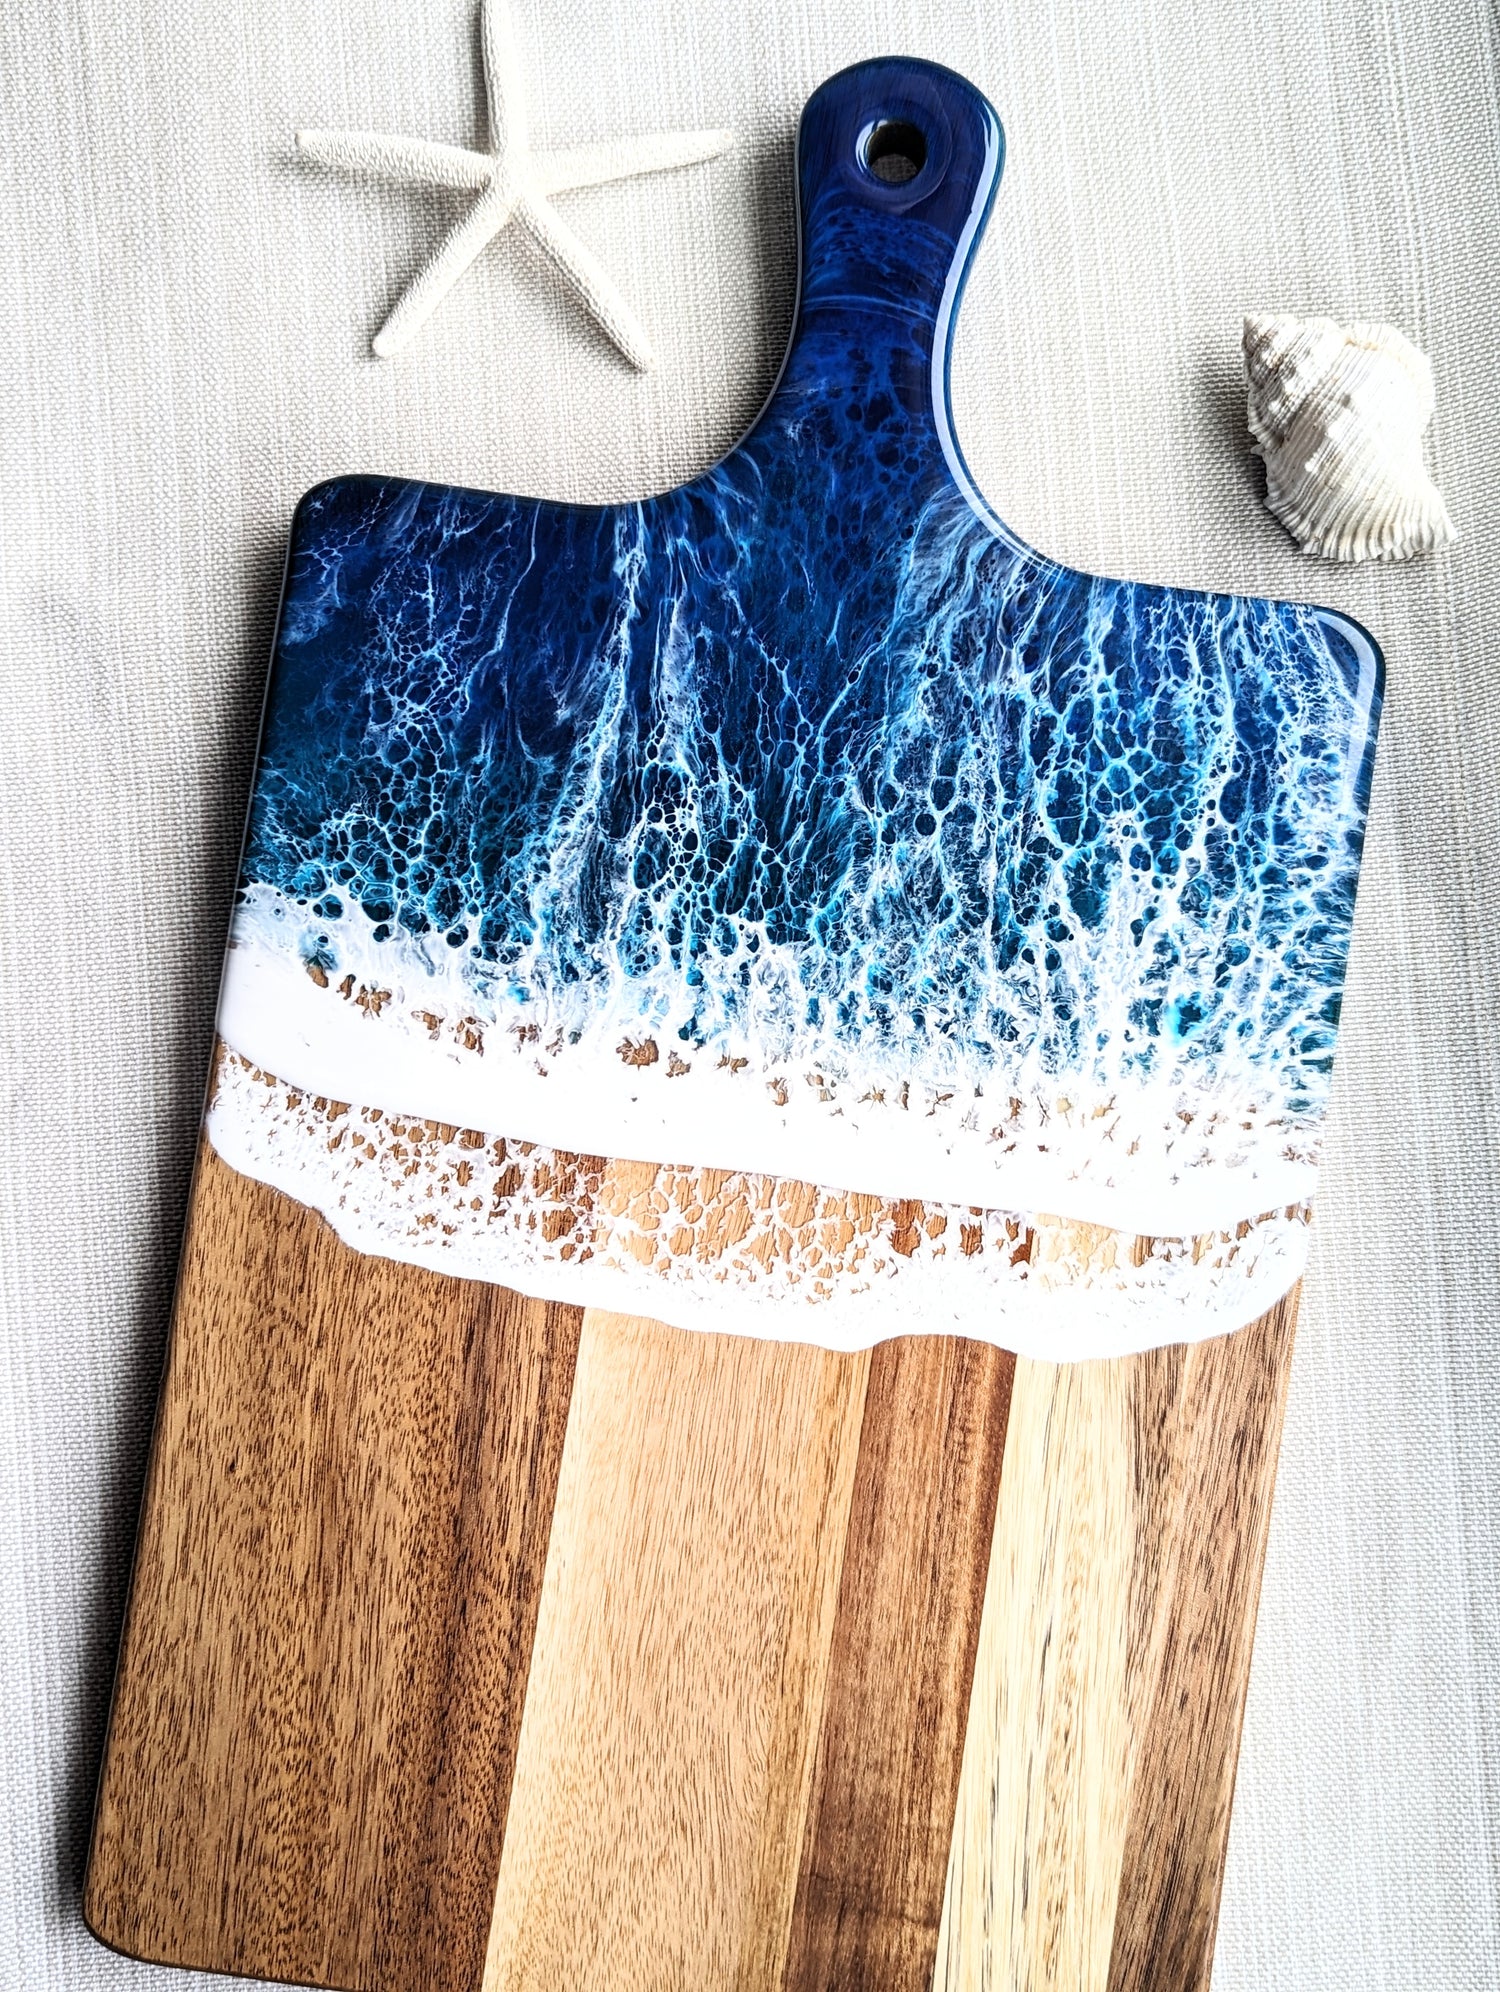 Cappa Creations coastal wave charcuterie board, handmade cheese board, serving tray, ocean art, resin wave board, beach board, tropical blue ocean waves, rustic acacia wood, large wave board